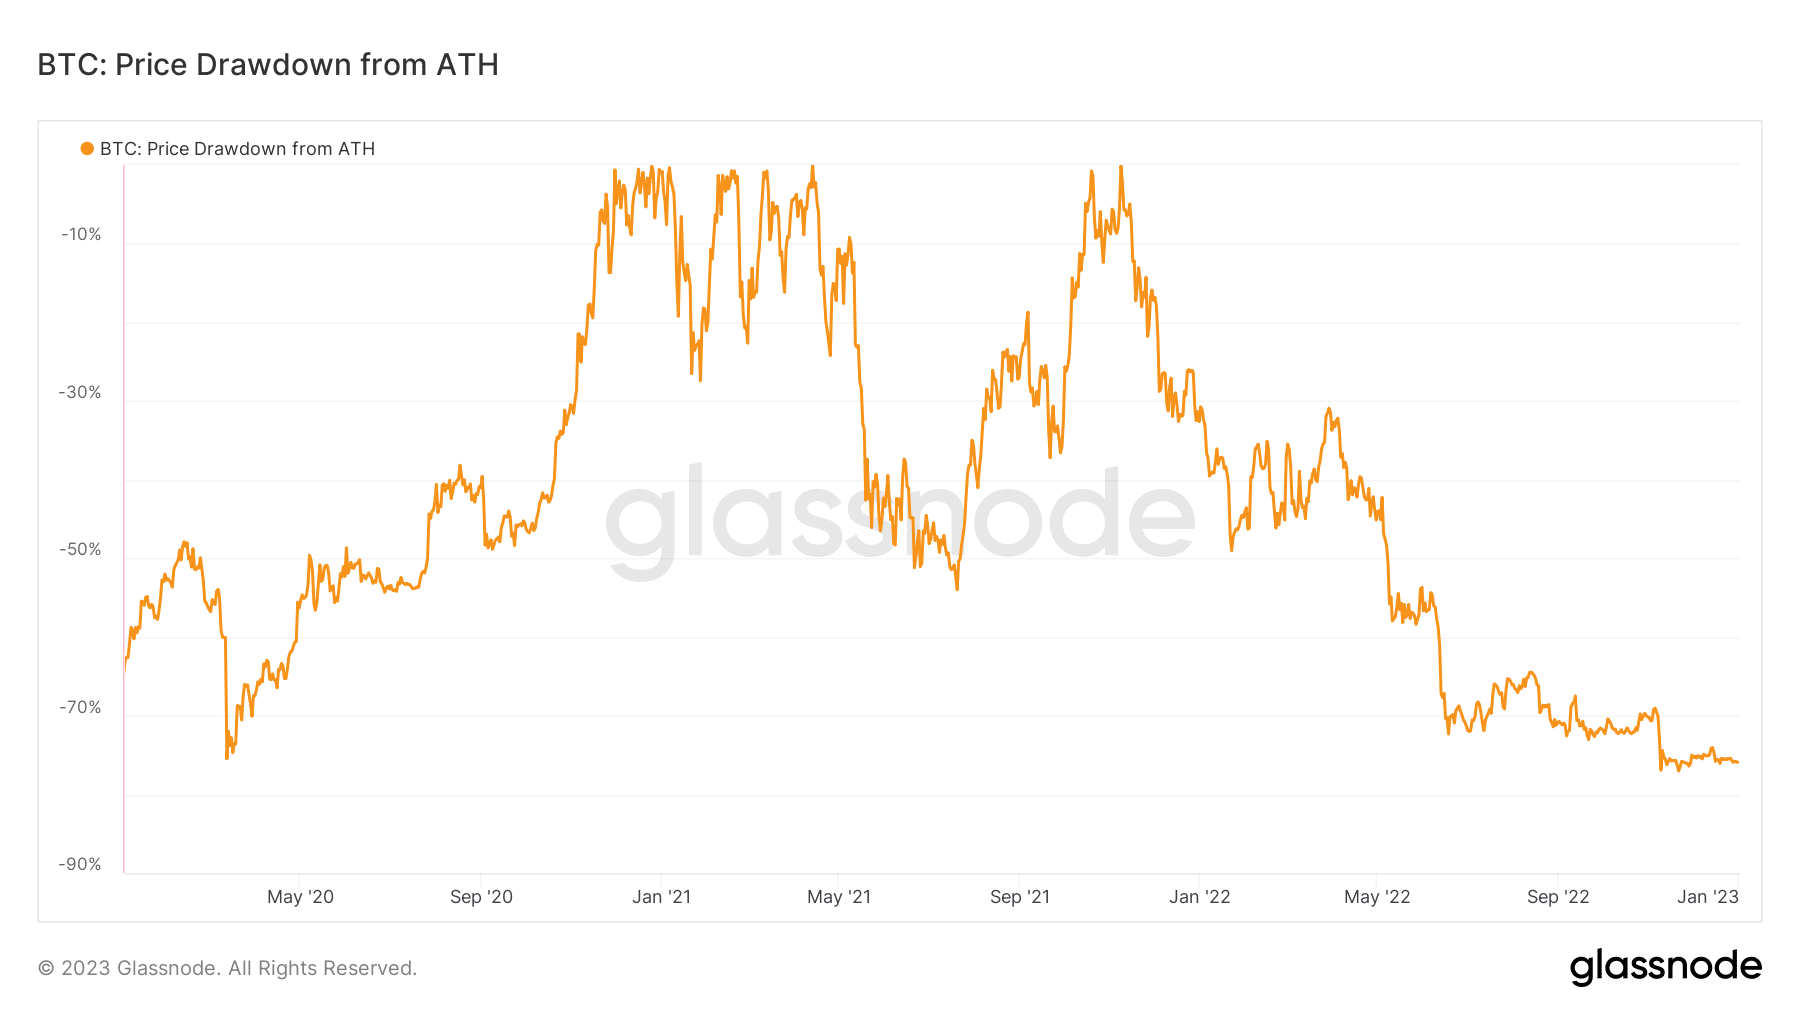 Bitcoin price drawdown from ATH